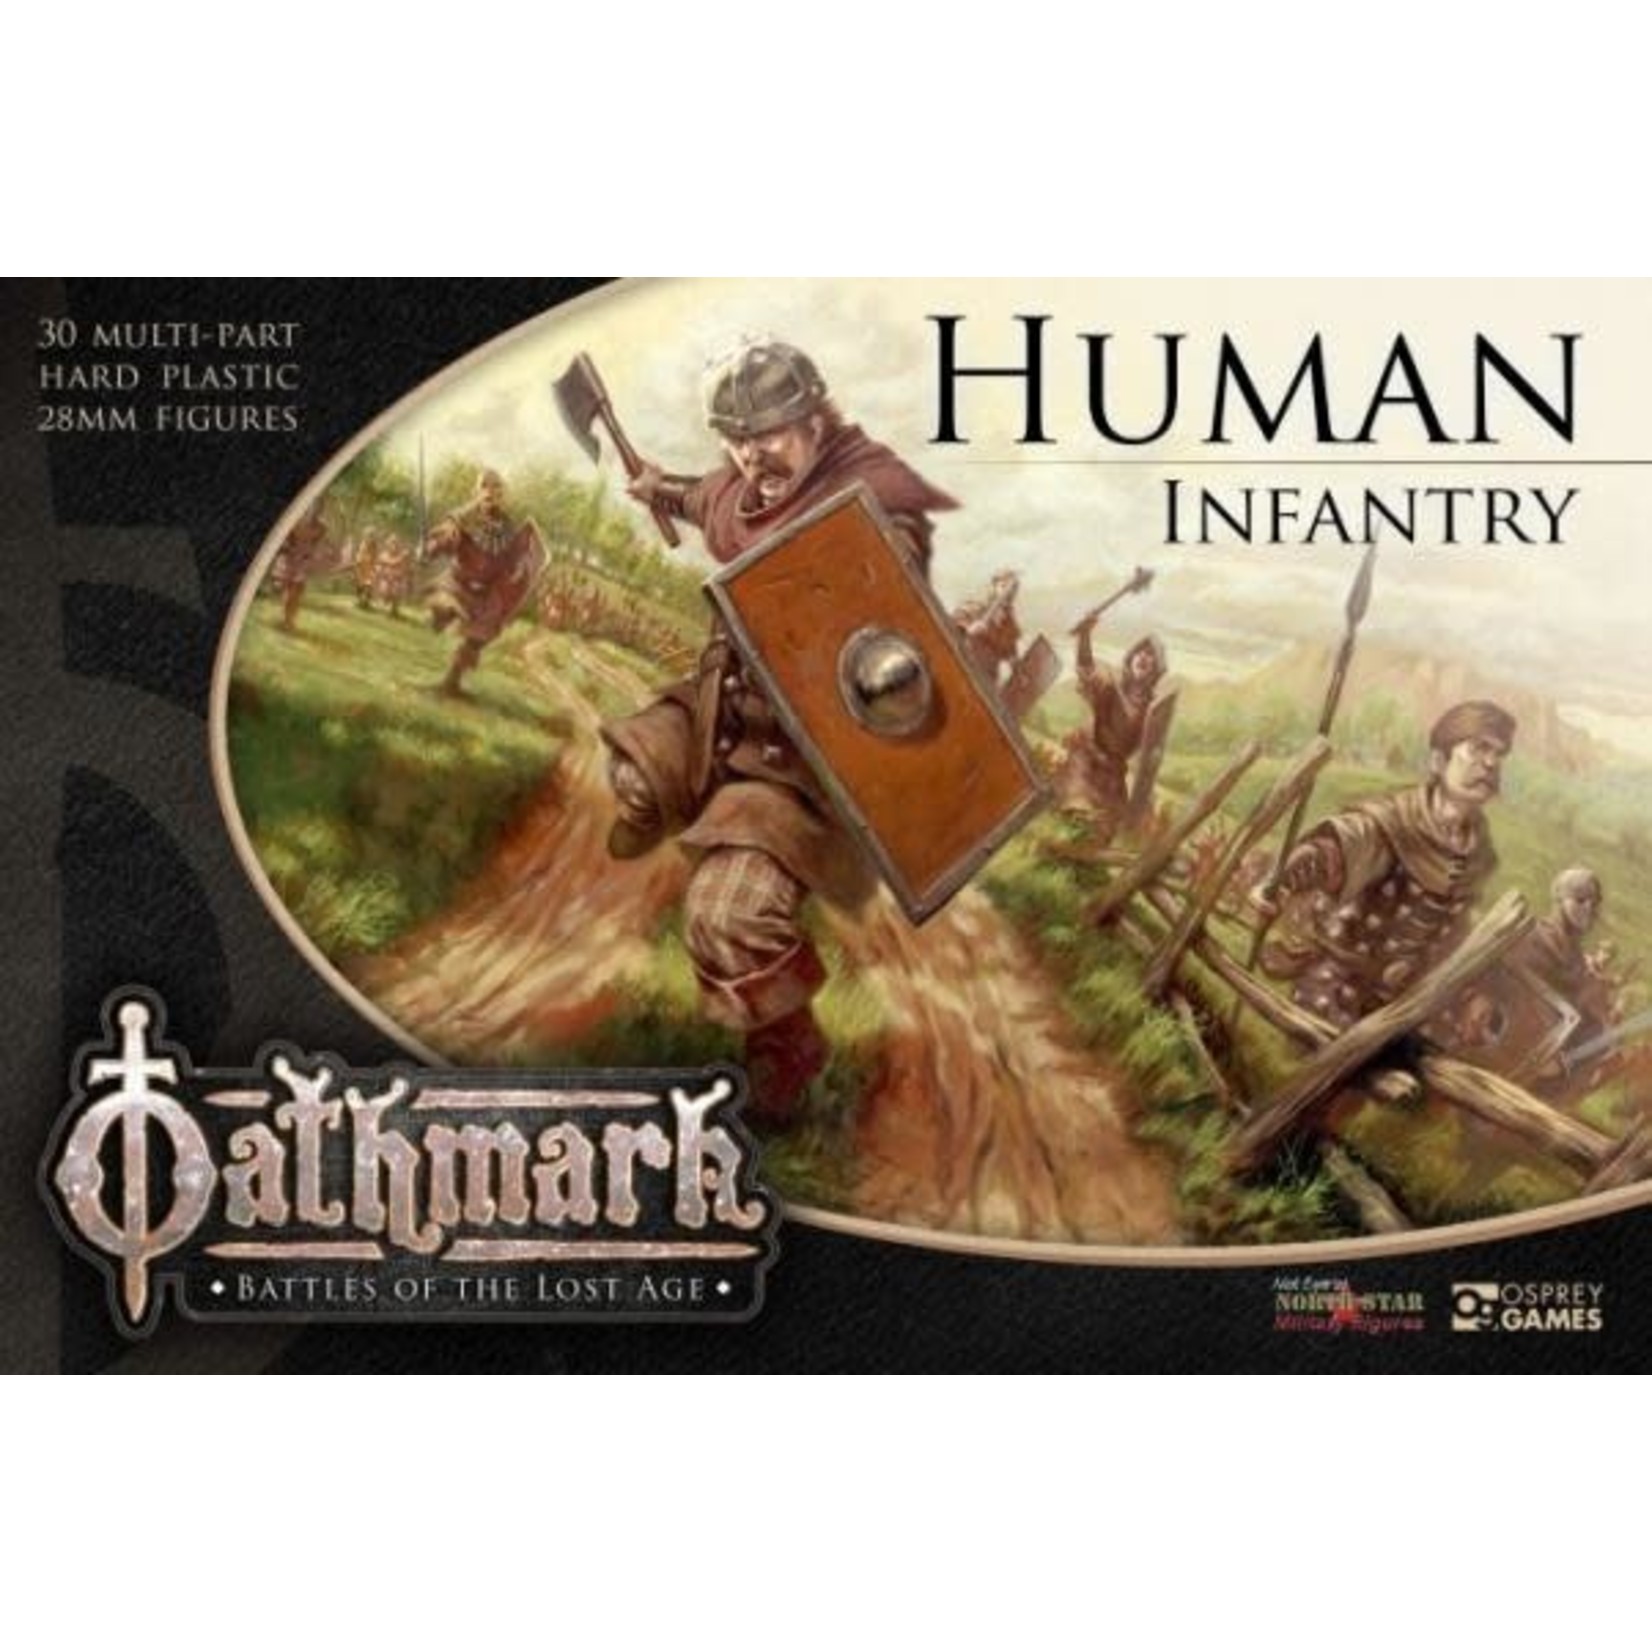 North Star Games Oathmark: Human Infantry